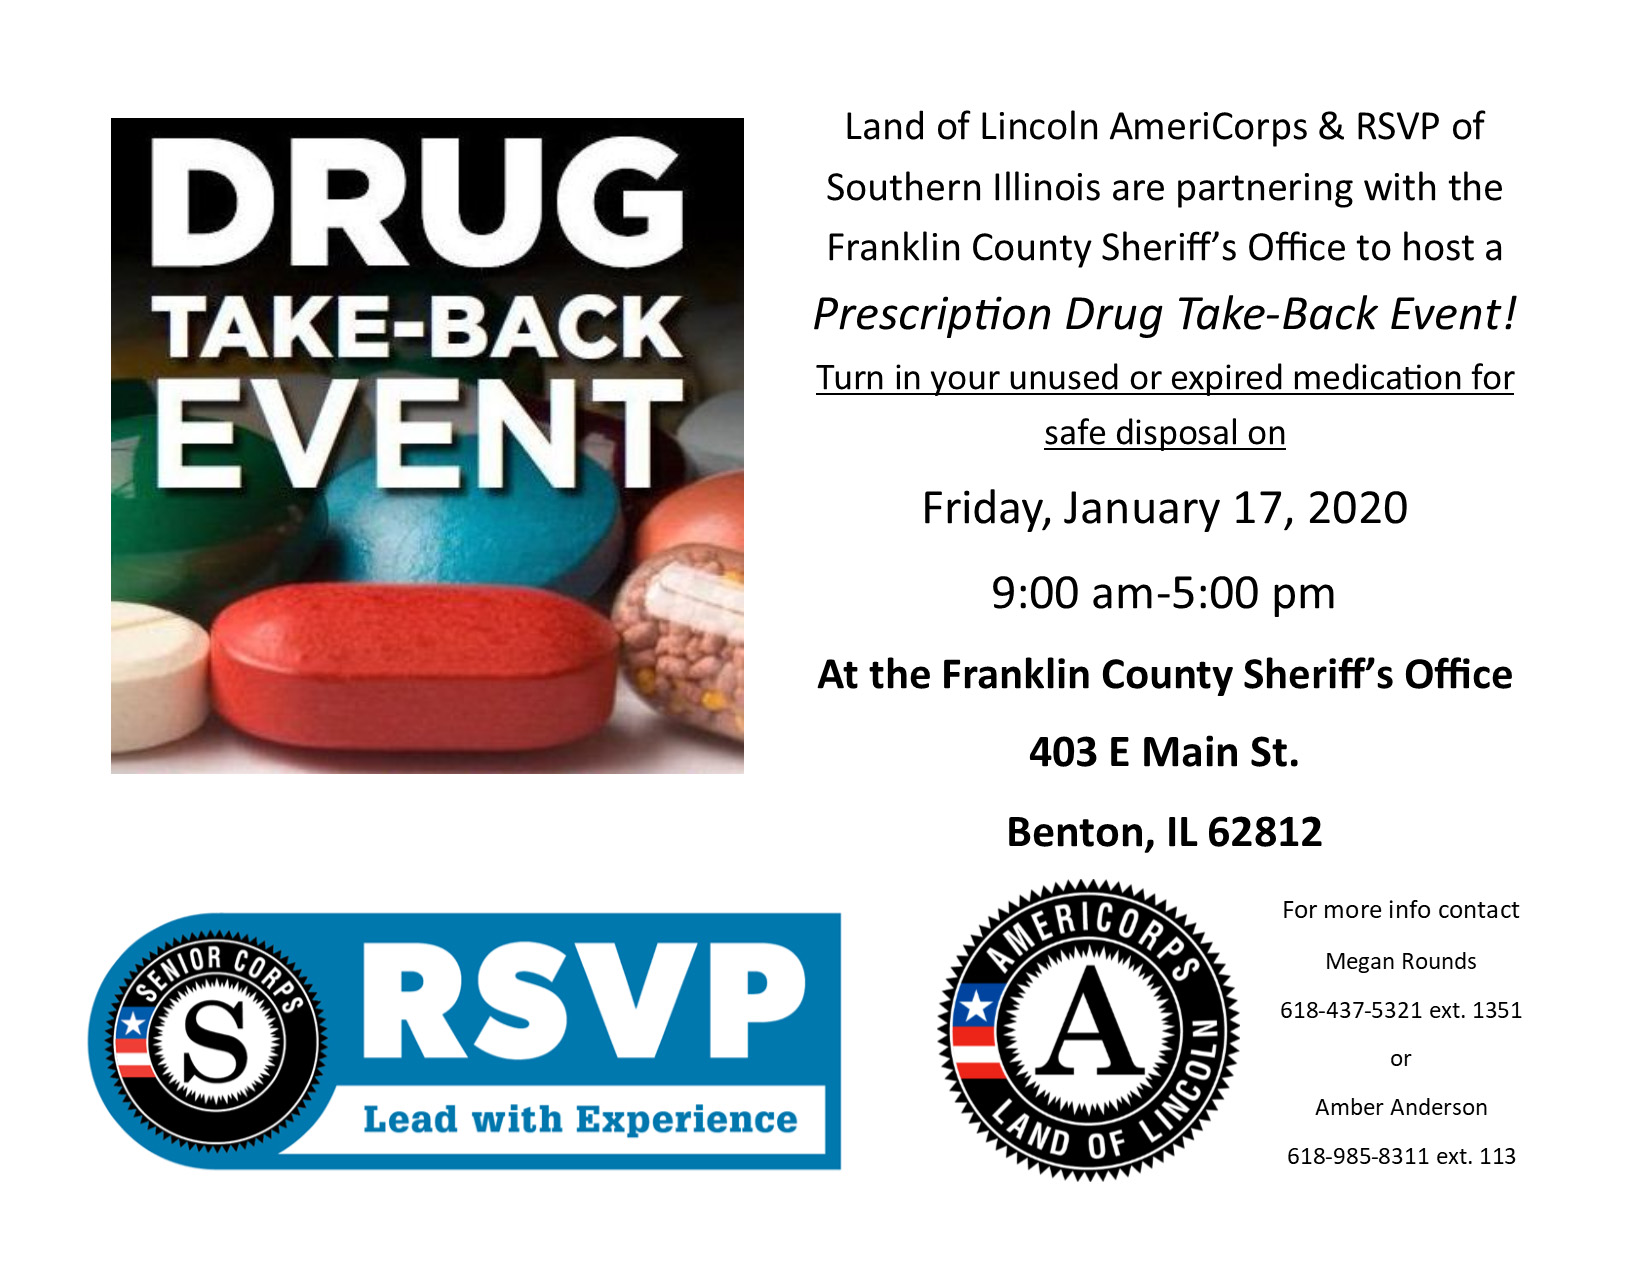 Land of Lincoln AmeriCorps will host Prescription Drug Take-Back event